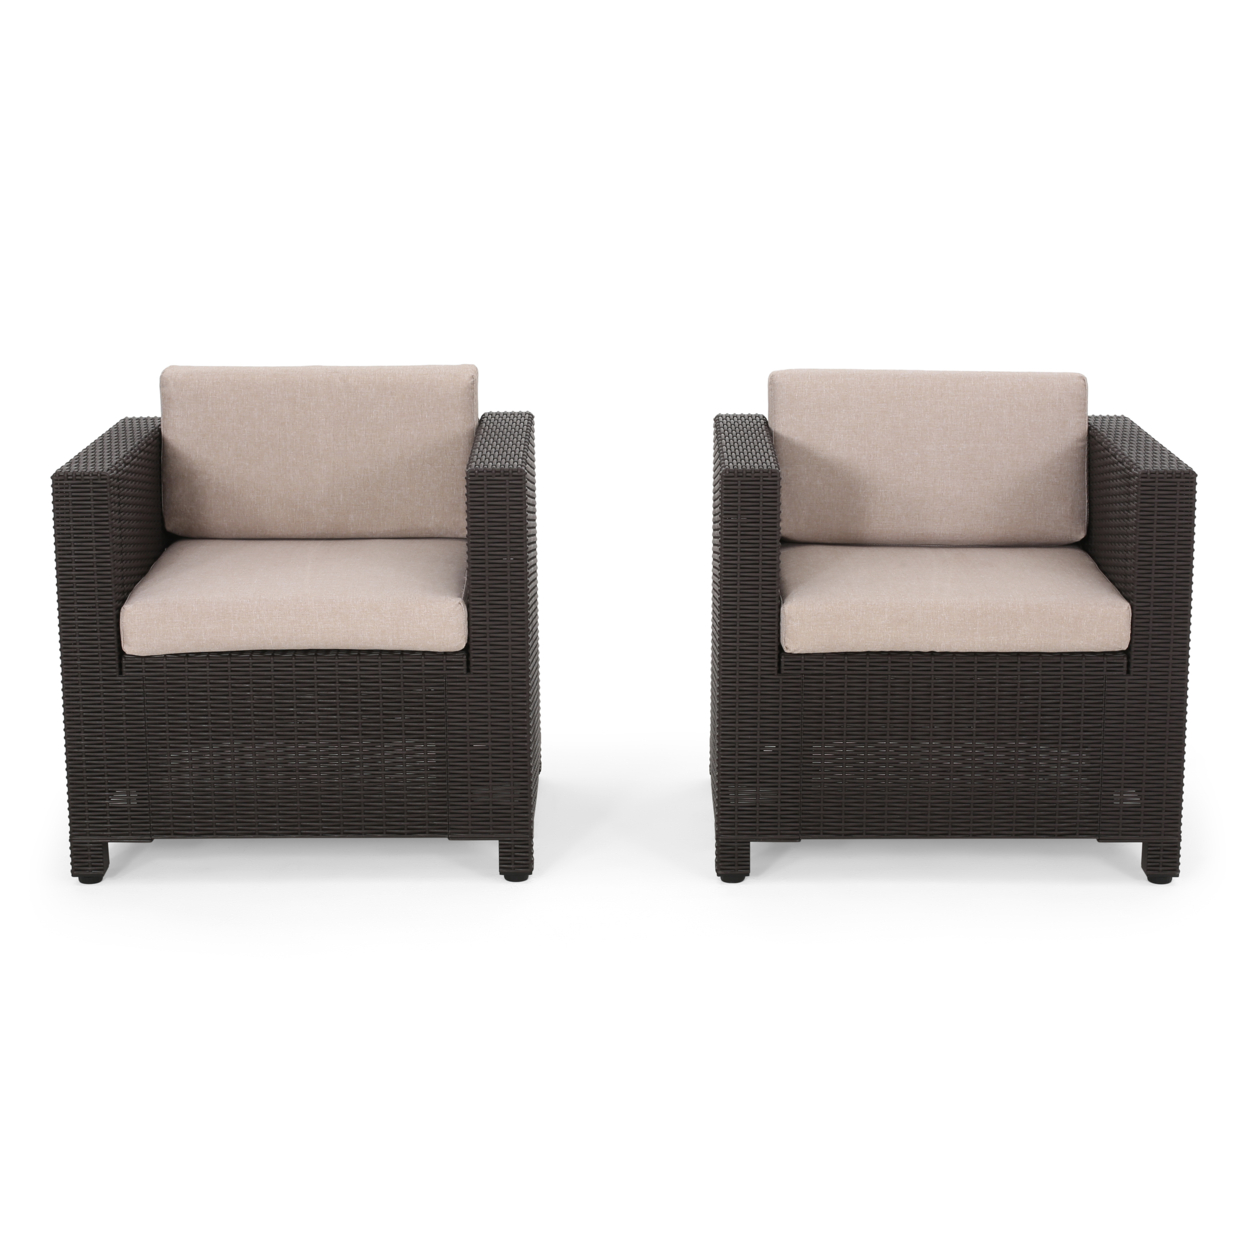 Odessa Outdoor Wicker Club Chair With Cushions (Set Of 2) - Dark Brown + Beige